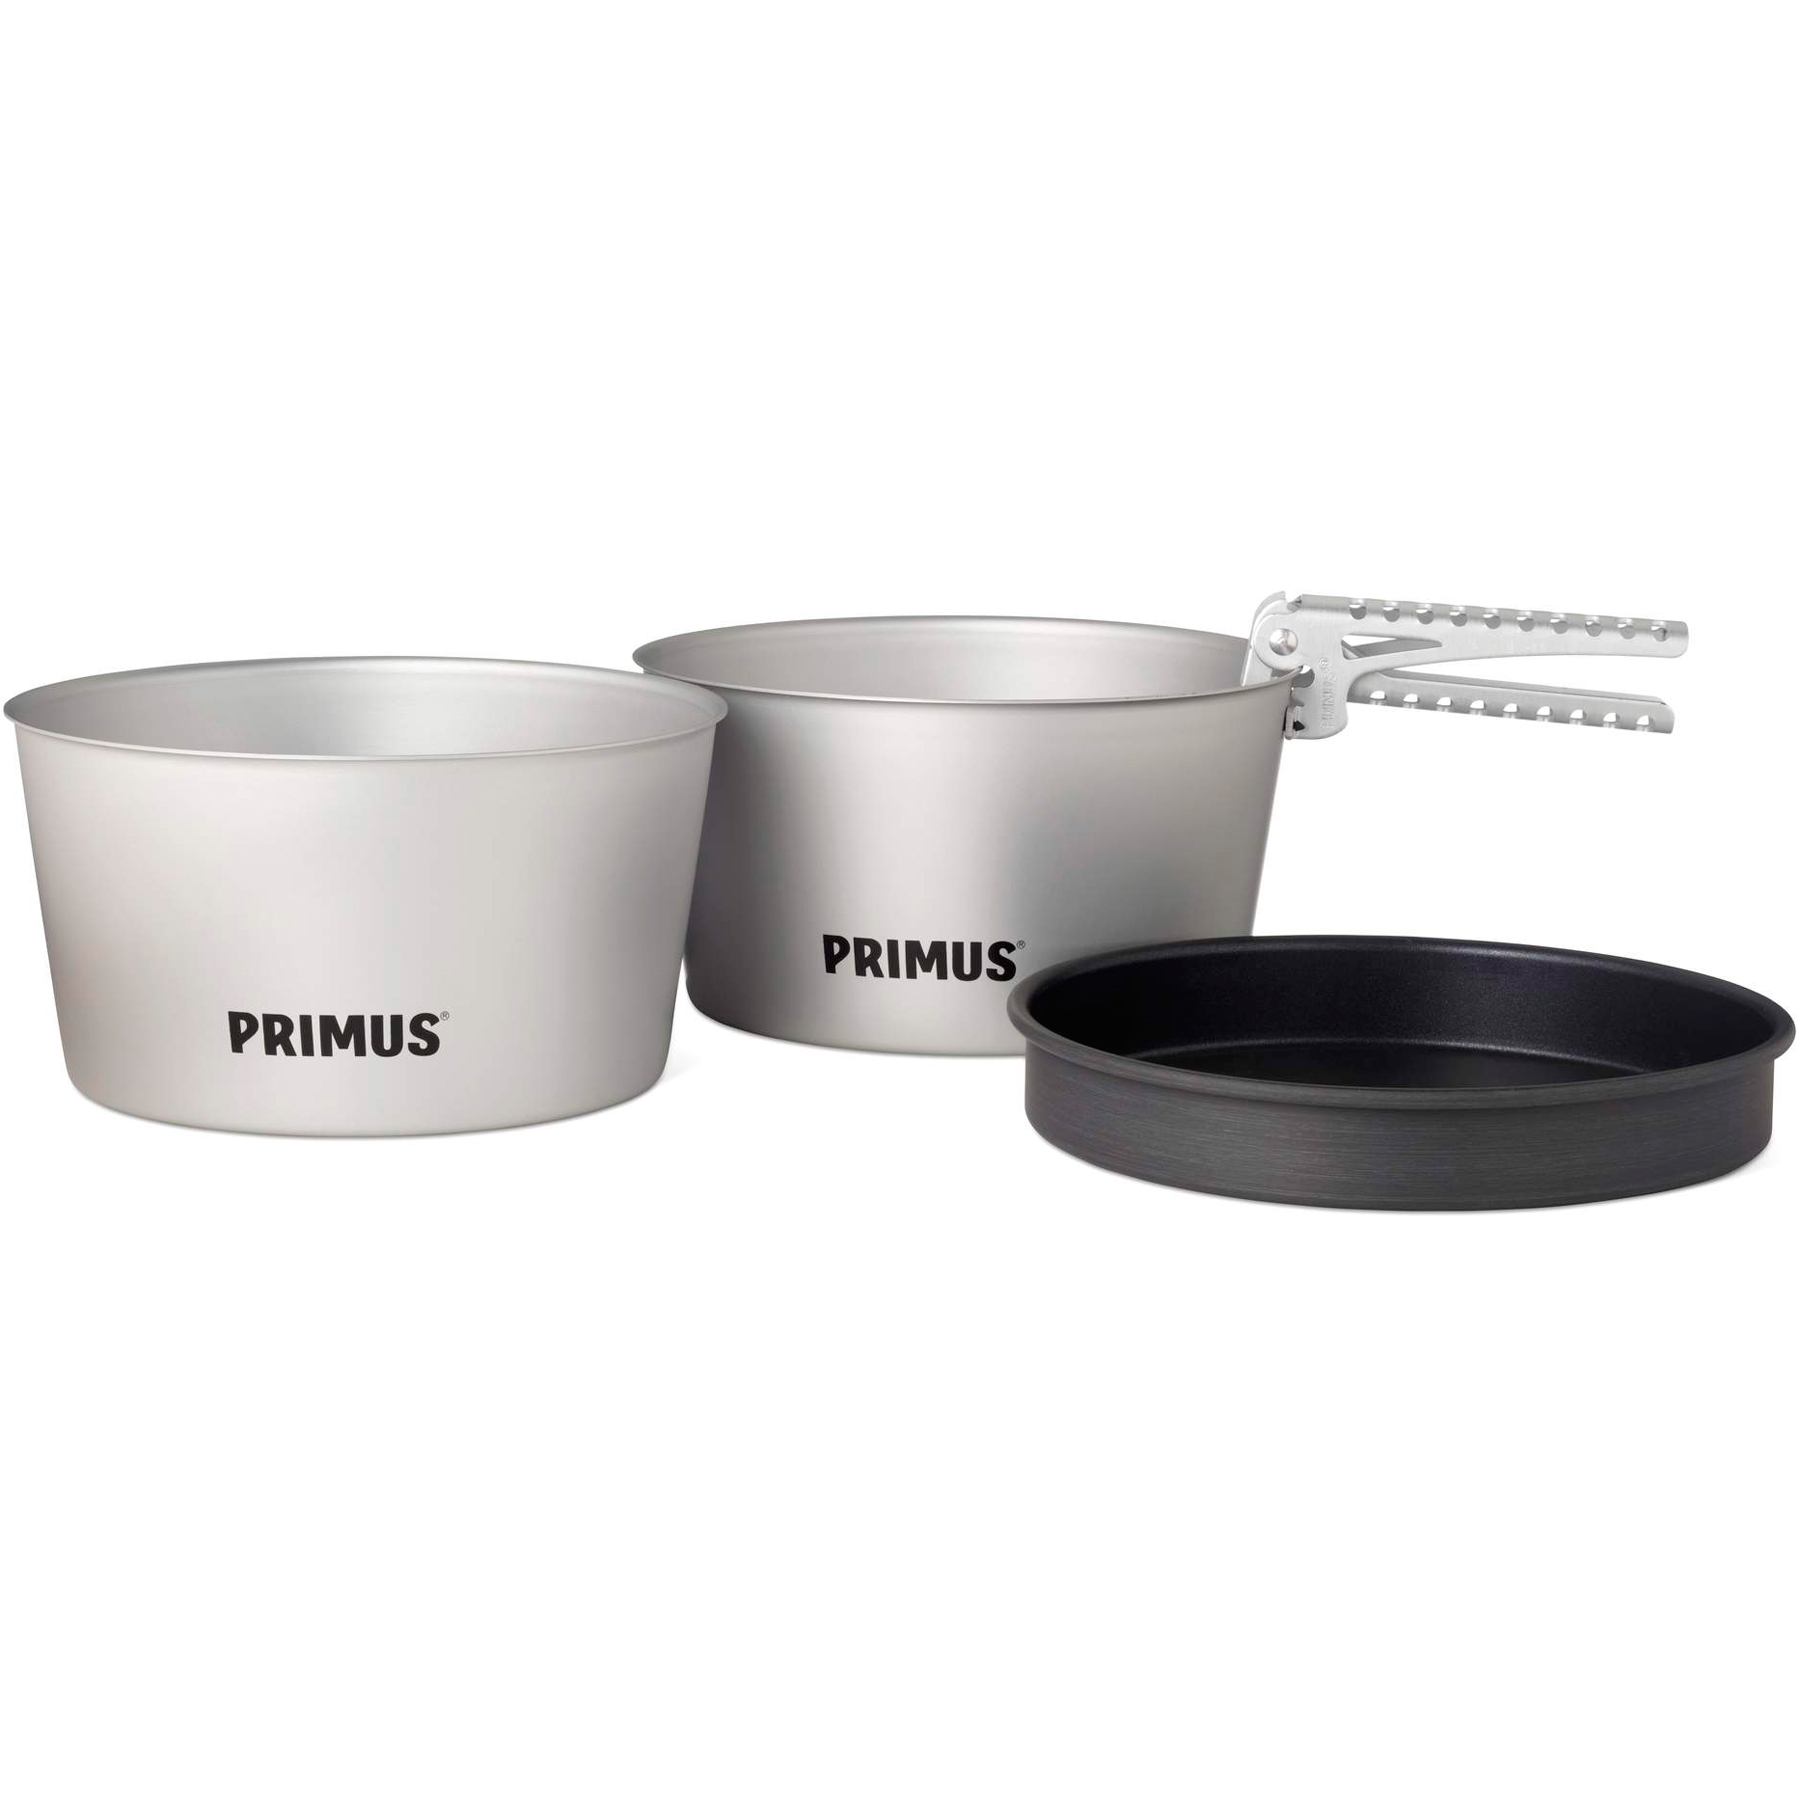 Bild von Primus Essential Pot Set 2x 2.3 L Topfset